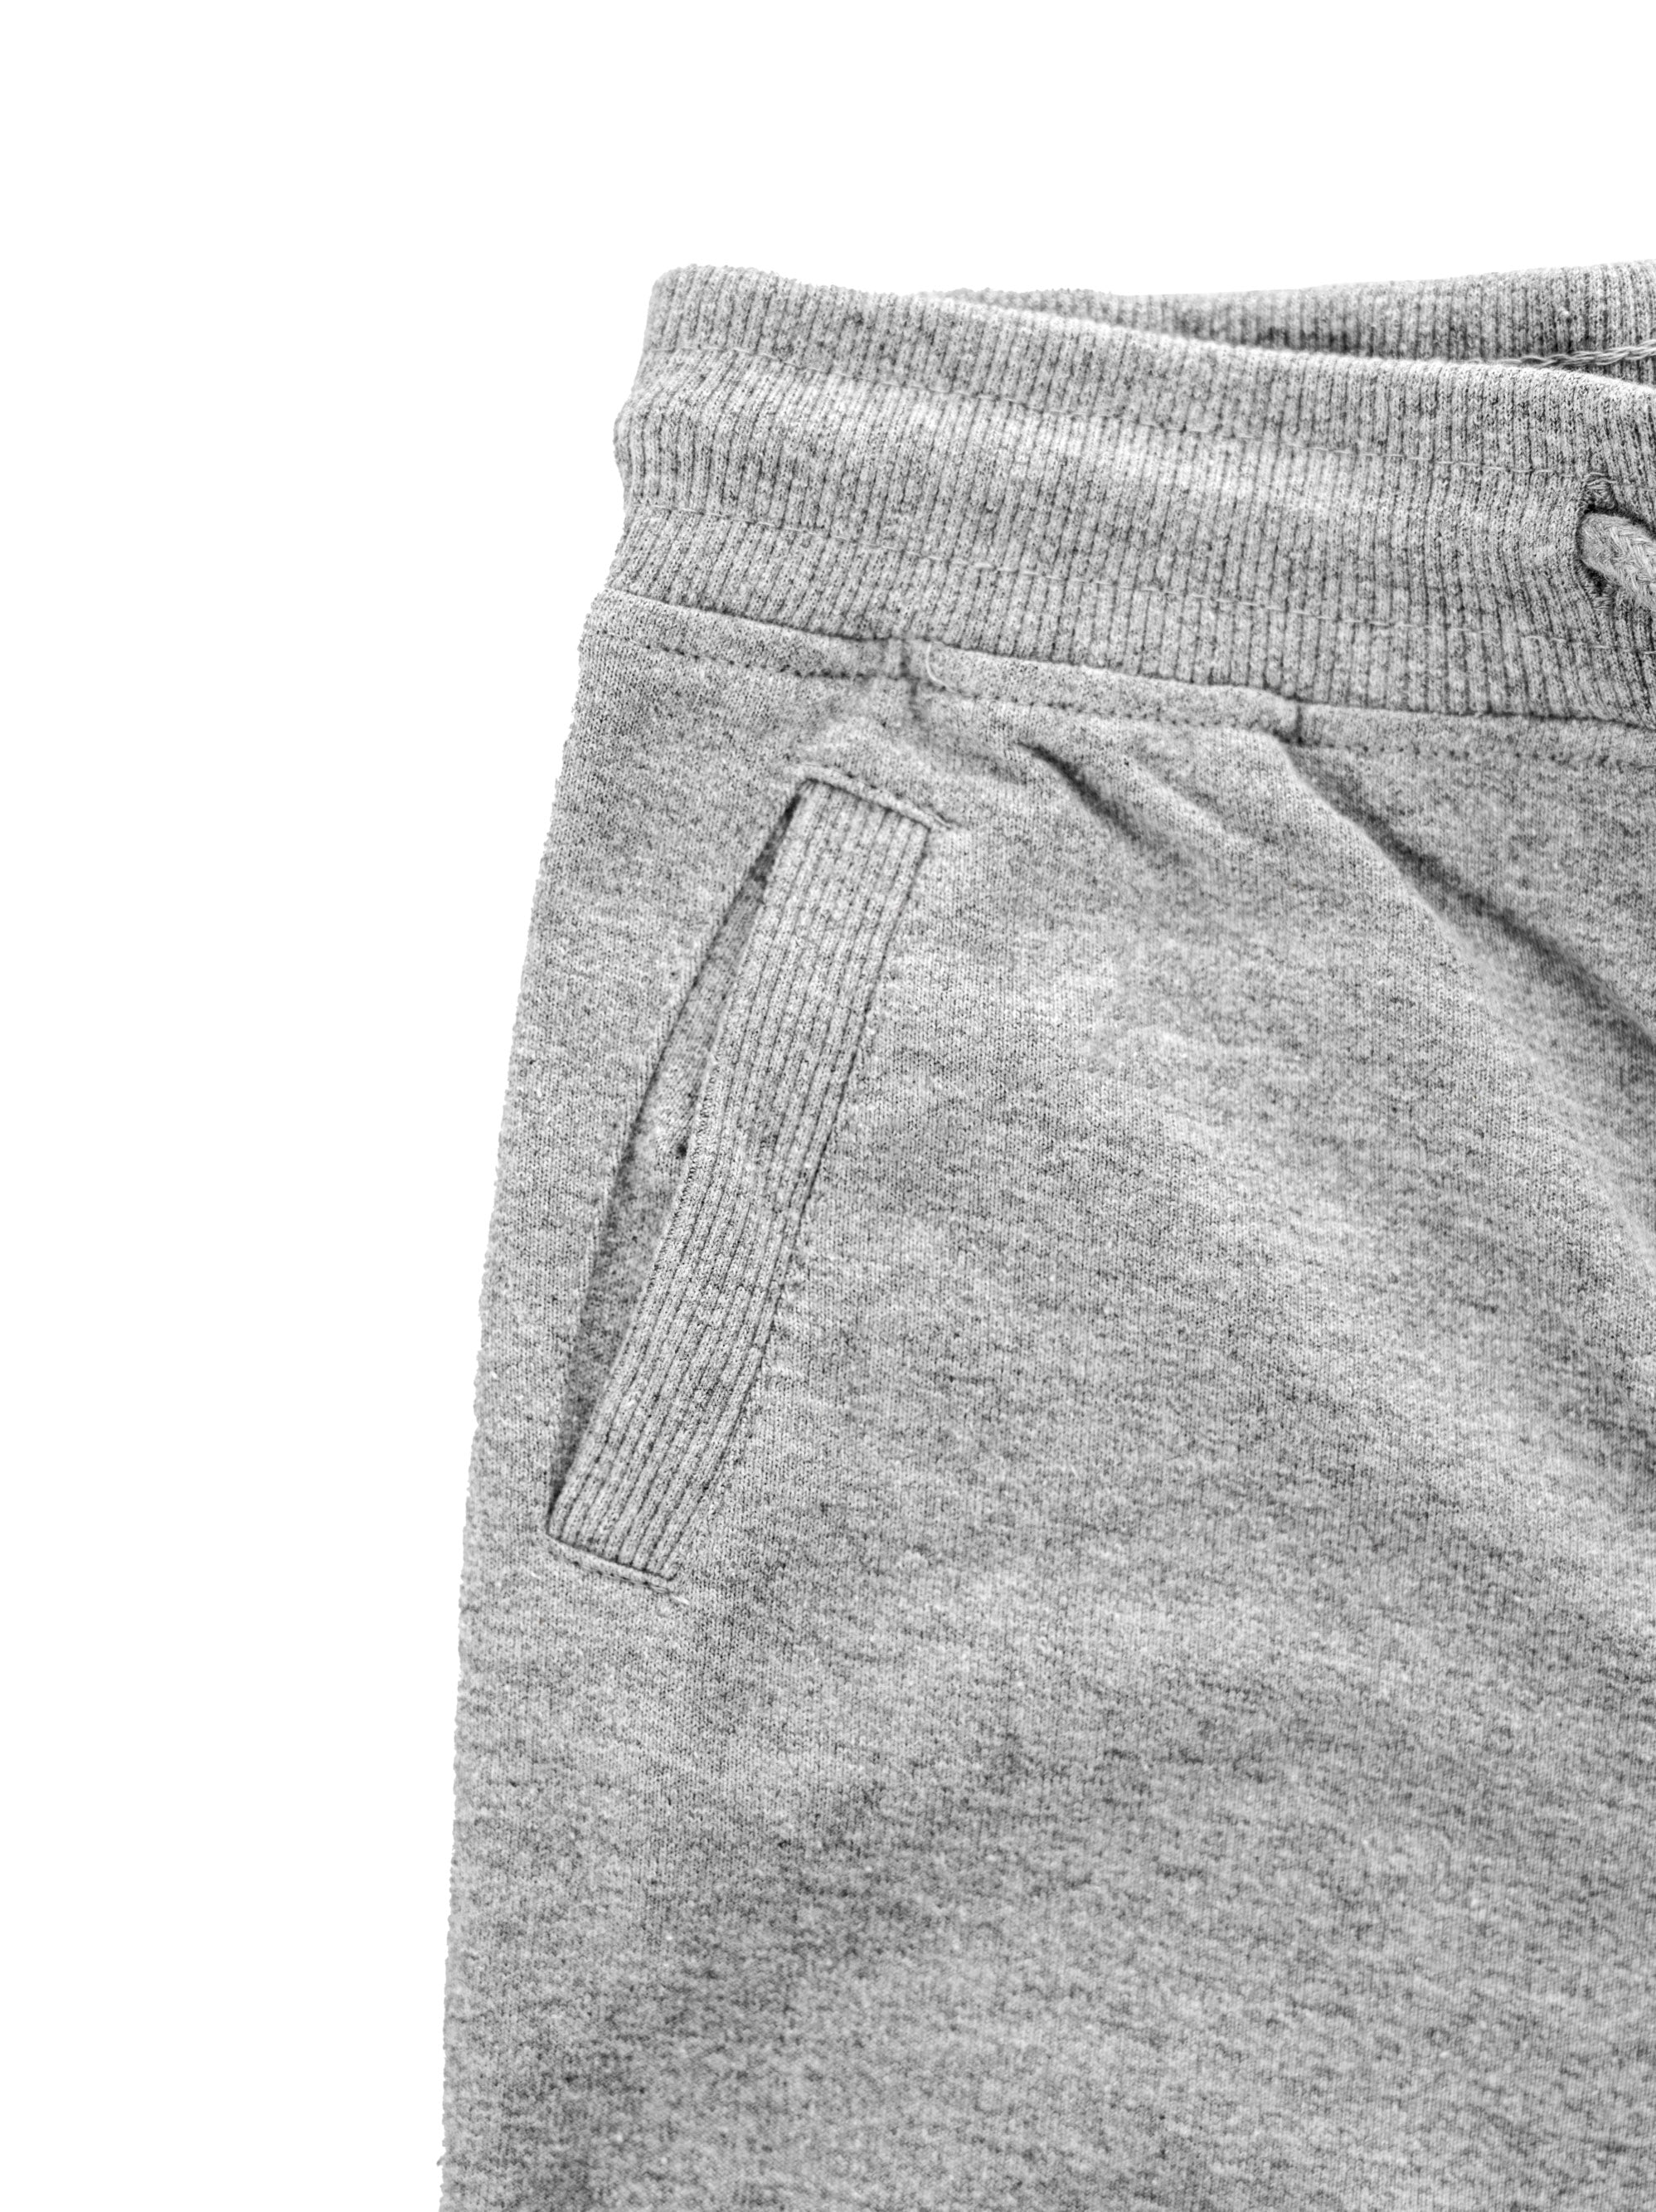 Unisex Grey Pants